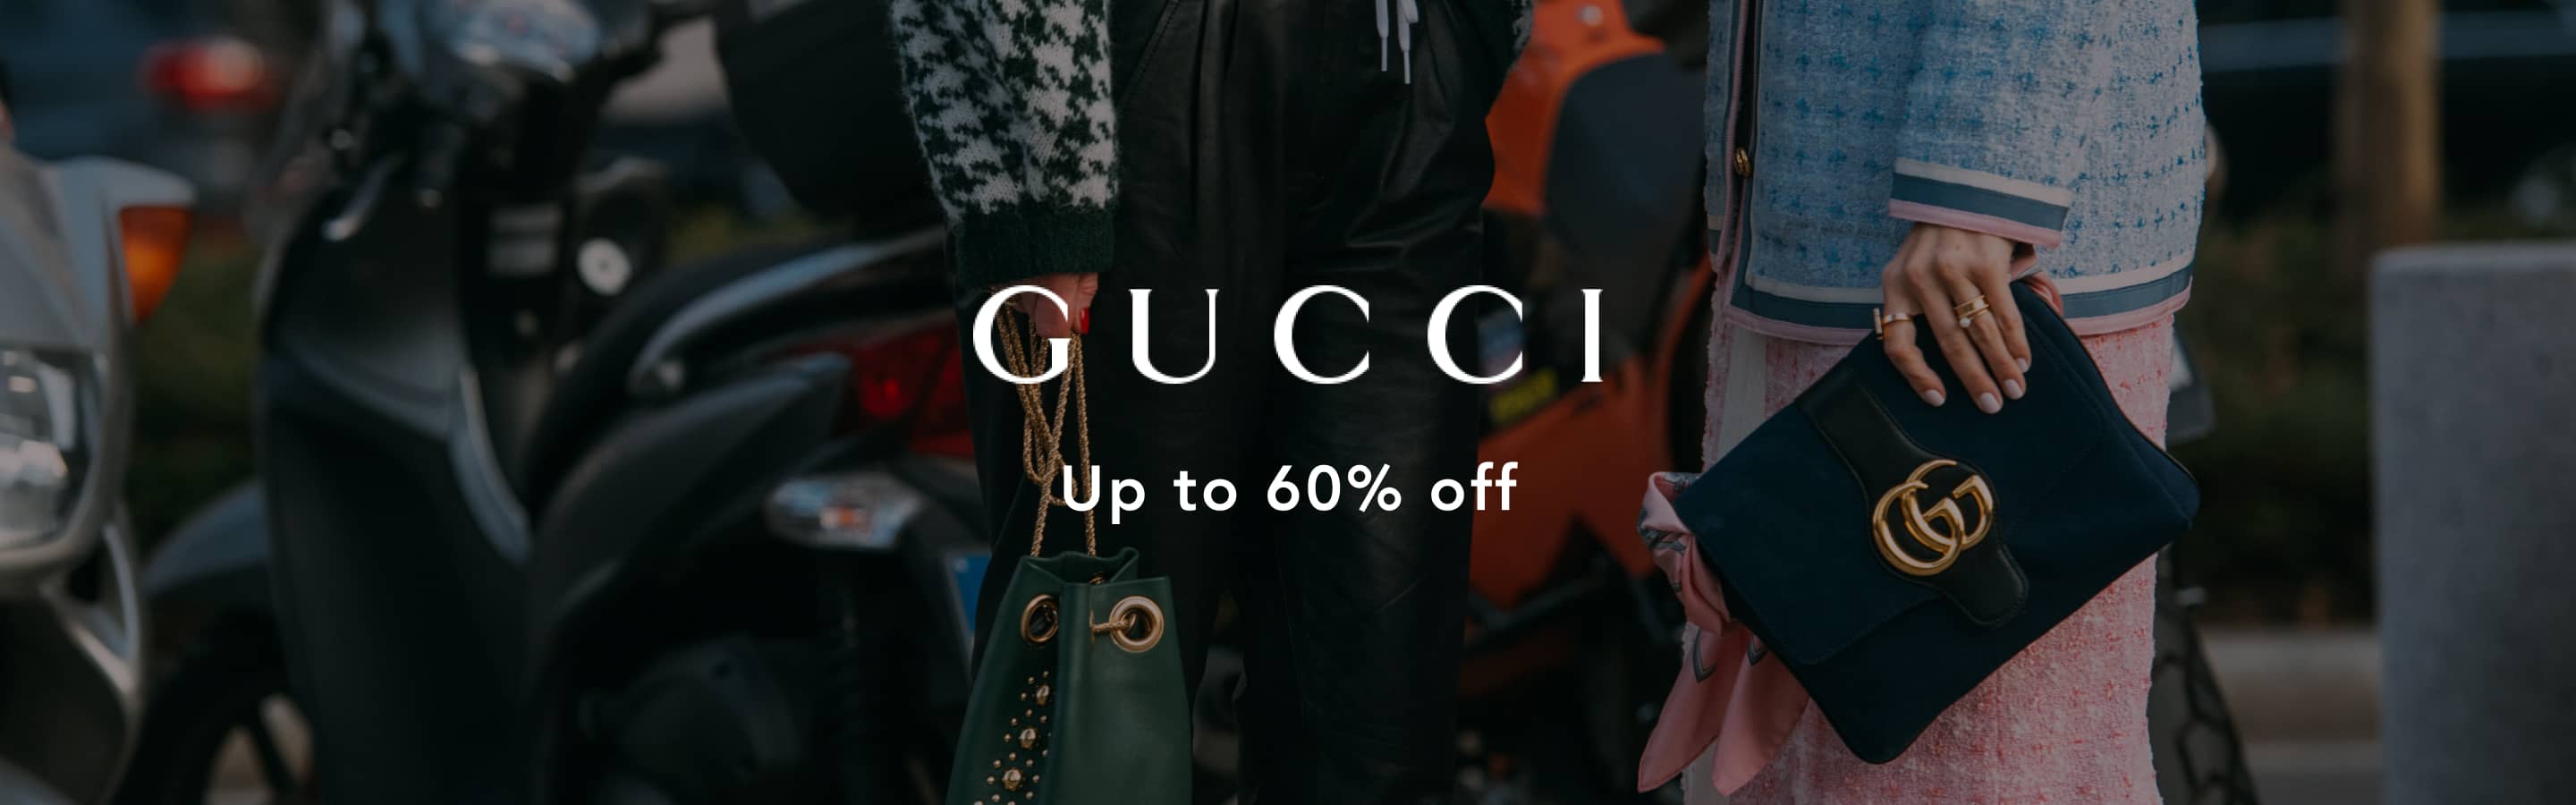 Gucci Outlet | Discounts on Sunglasses, Clothing & More | Secret Sales